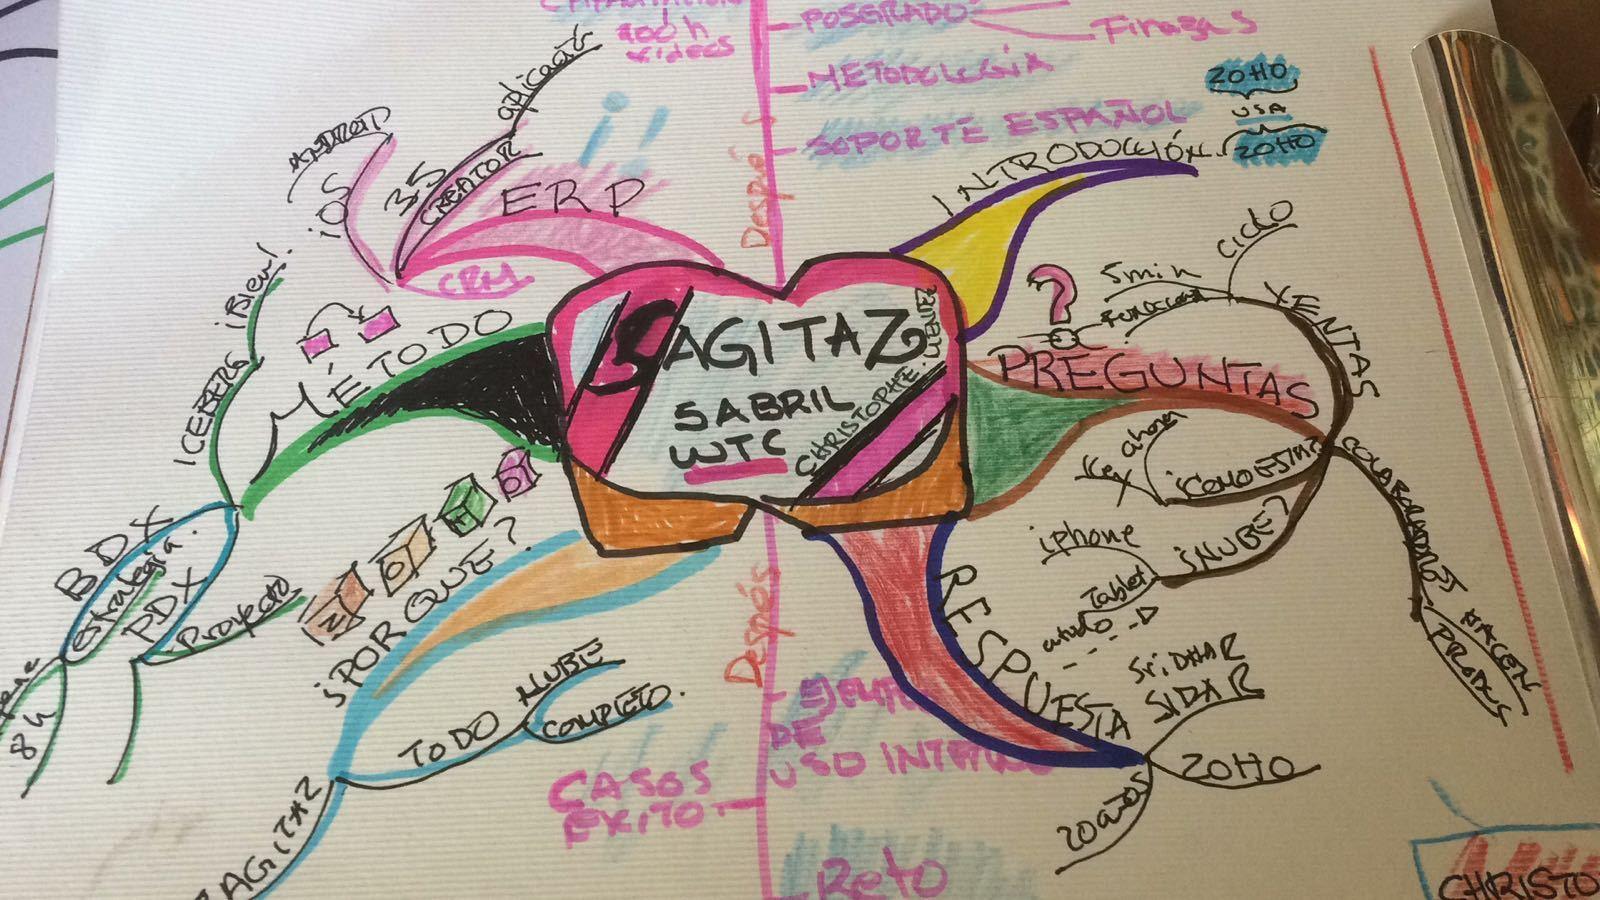 Mapa mental platica SagitaZ en eShow México 2017. Autor: Jose Luis Oliva